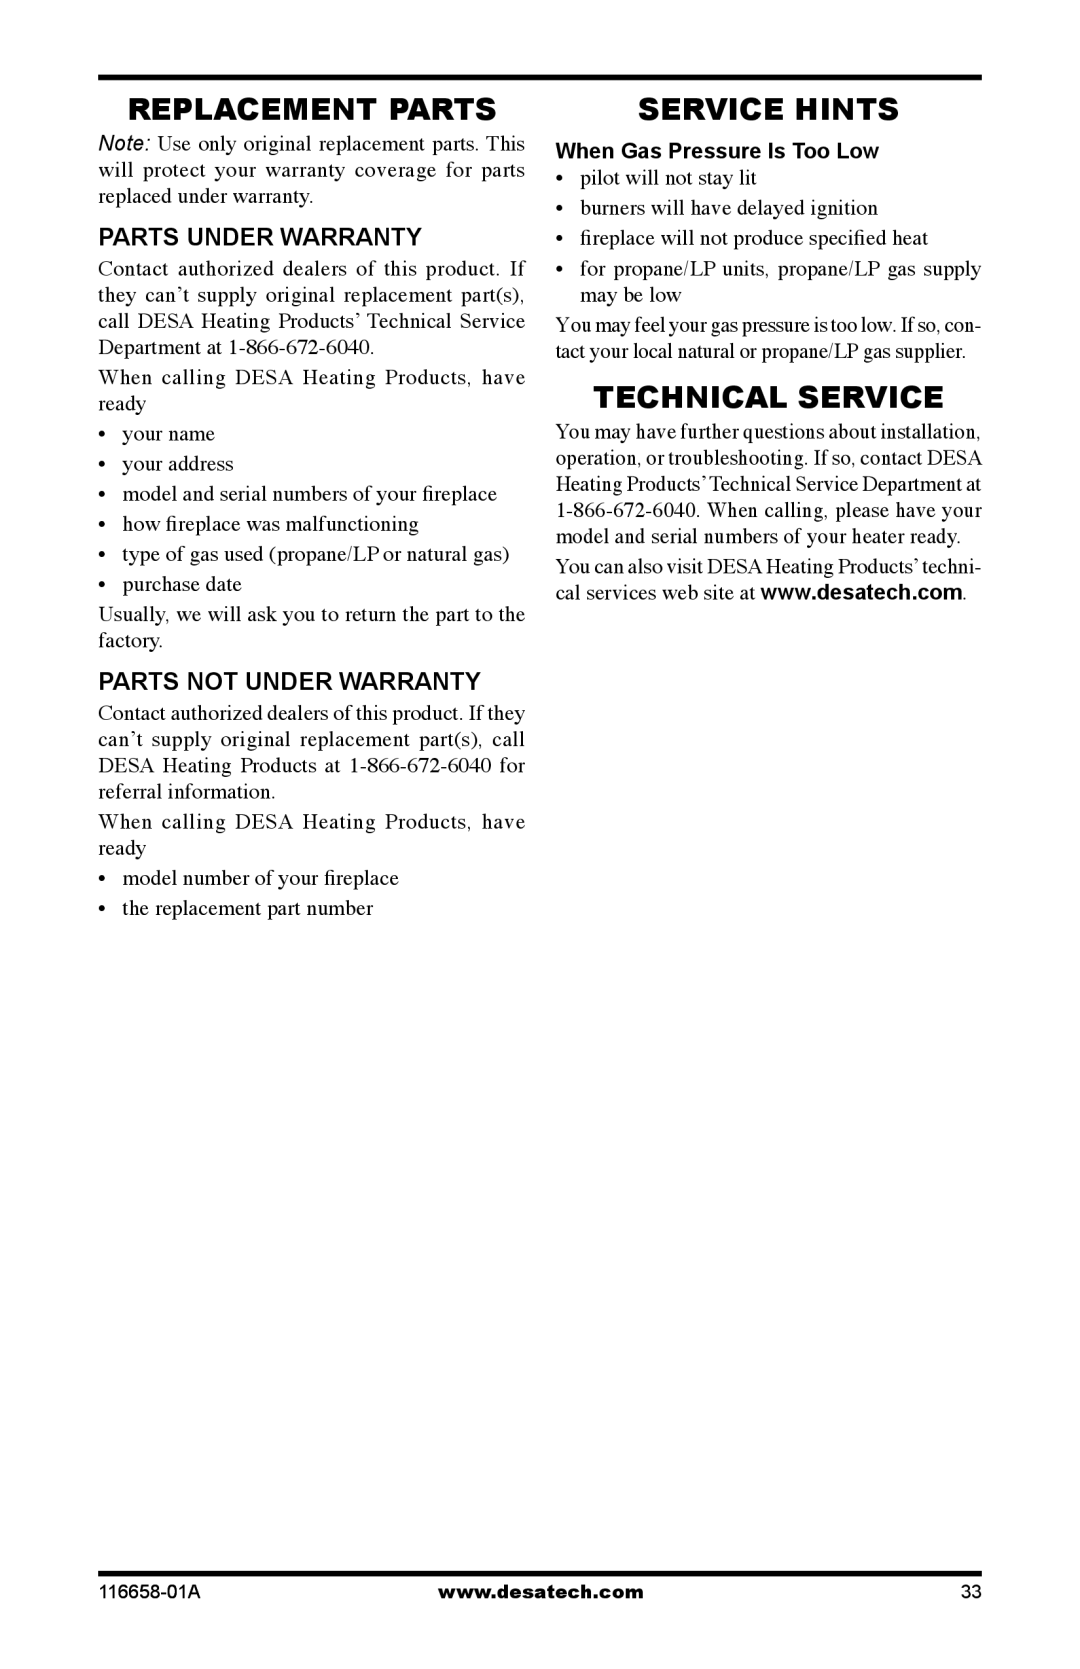 Desa CDCFPRA, CDCFNRA Replacement Parts, Service Hints, Technical Service, Parts Under Warranty, Parts Not Under Warranty 